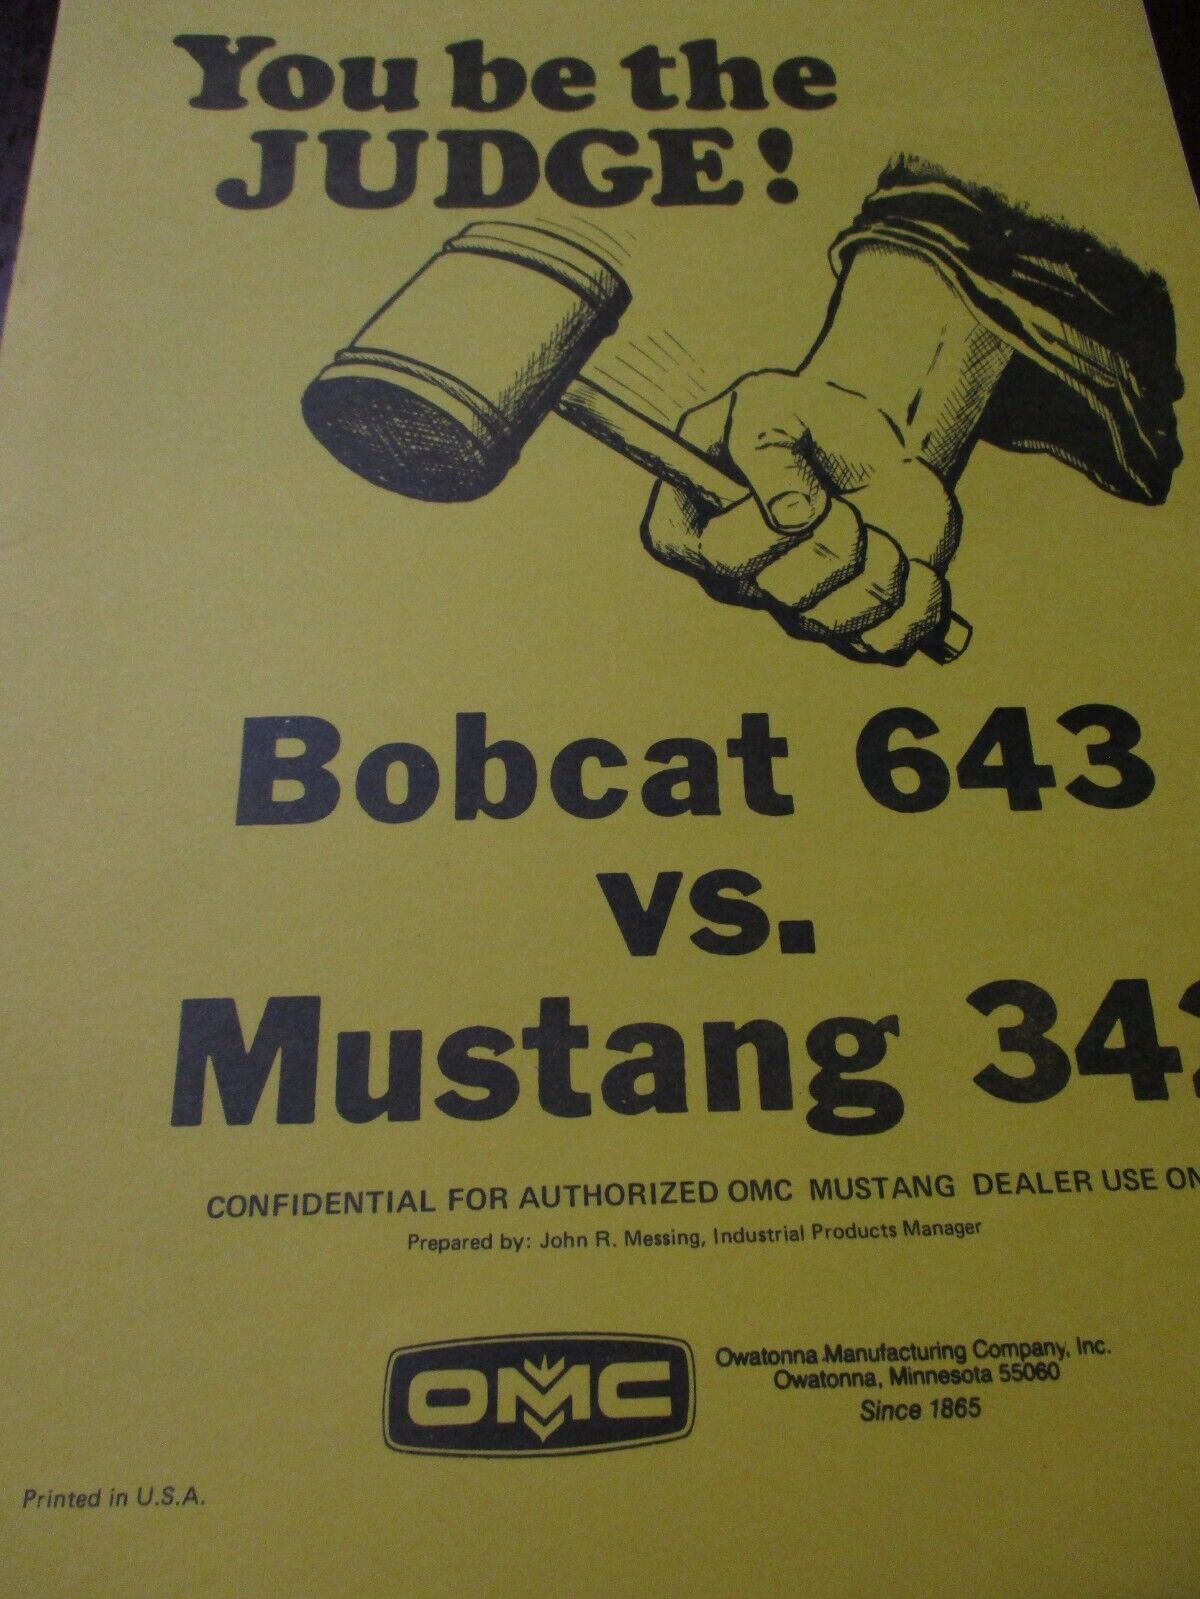 Owatonna 342 Mustang Loader VS Bobcat 643 Comparison Brochure 1984